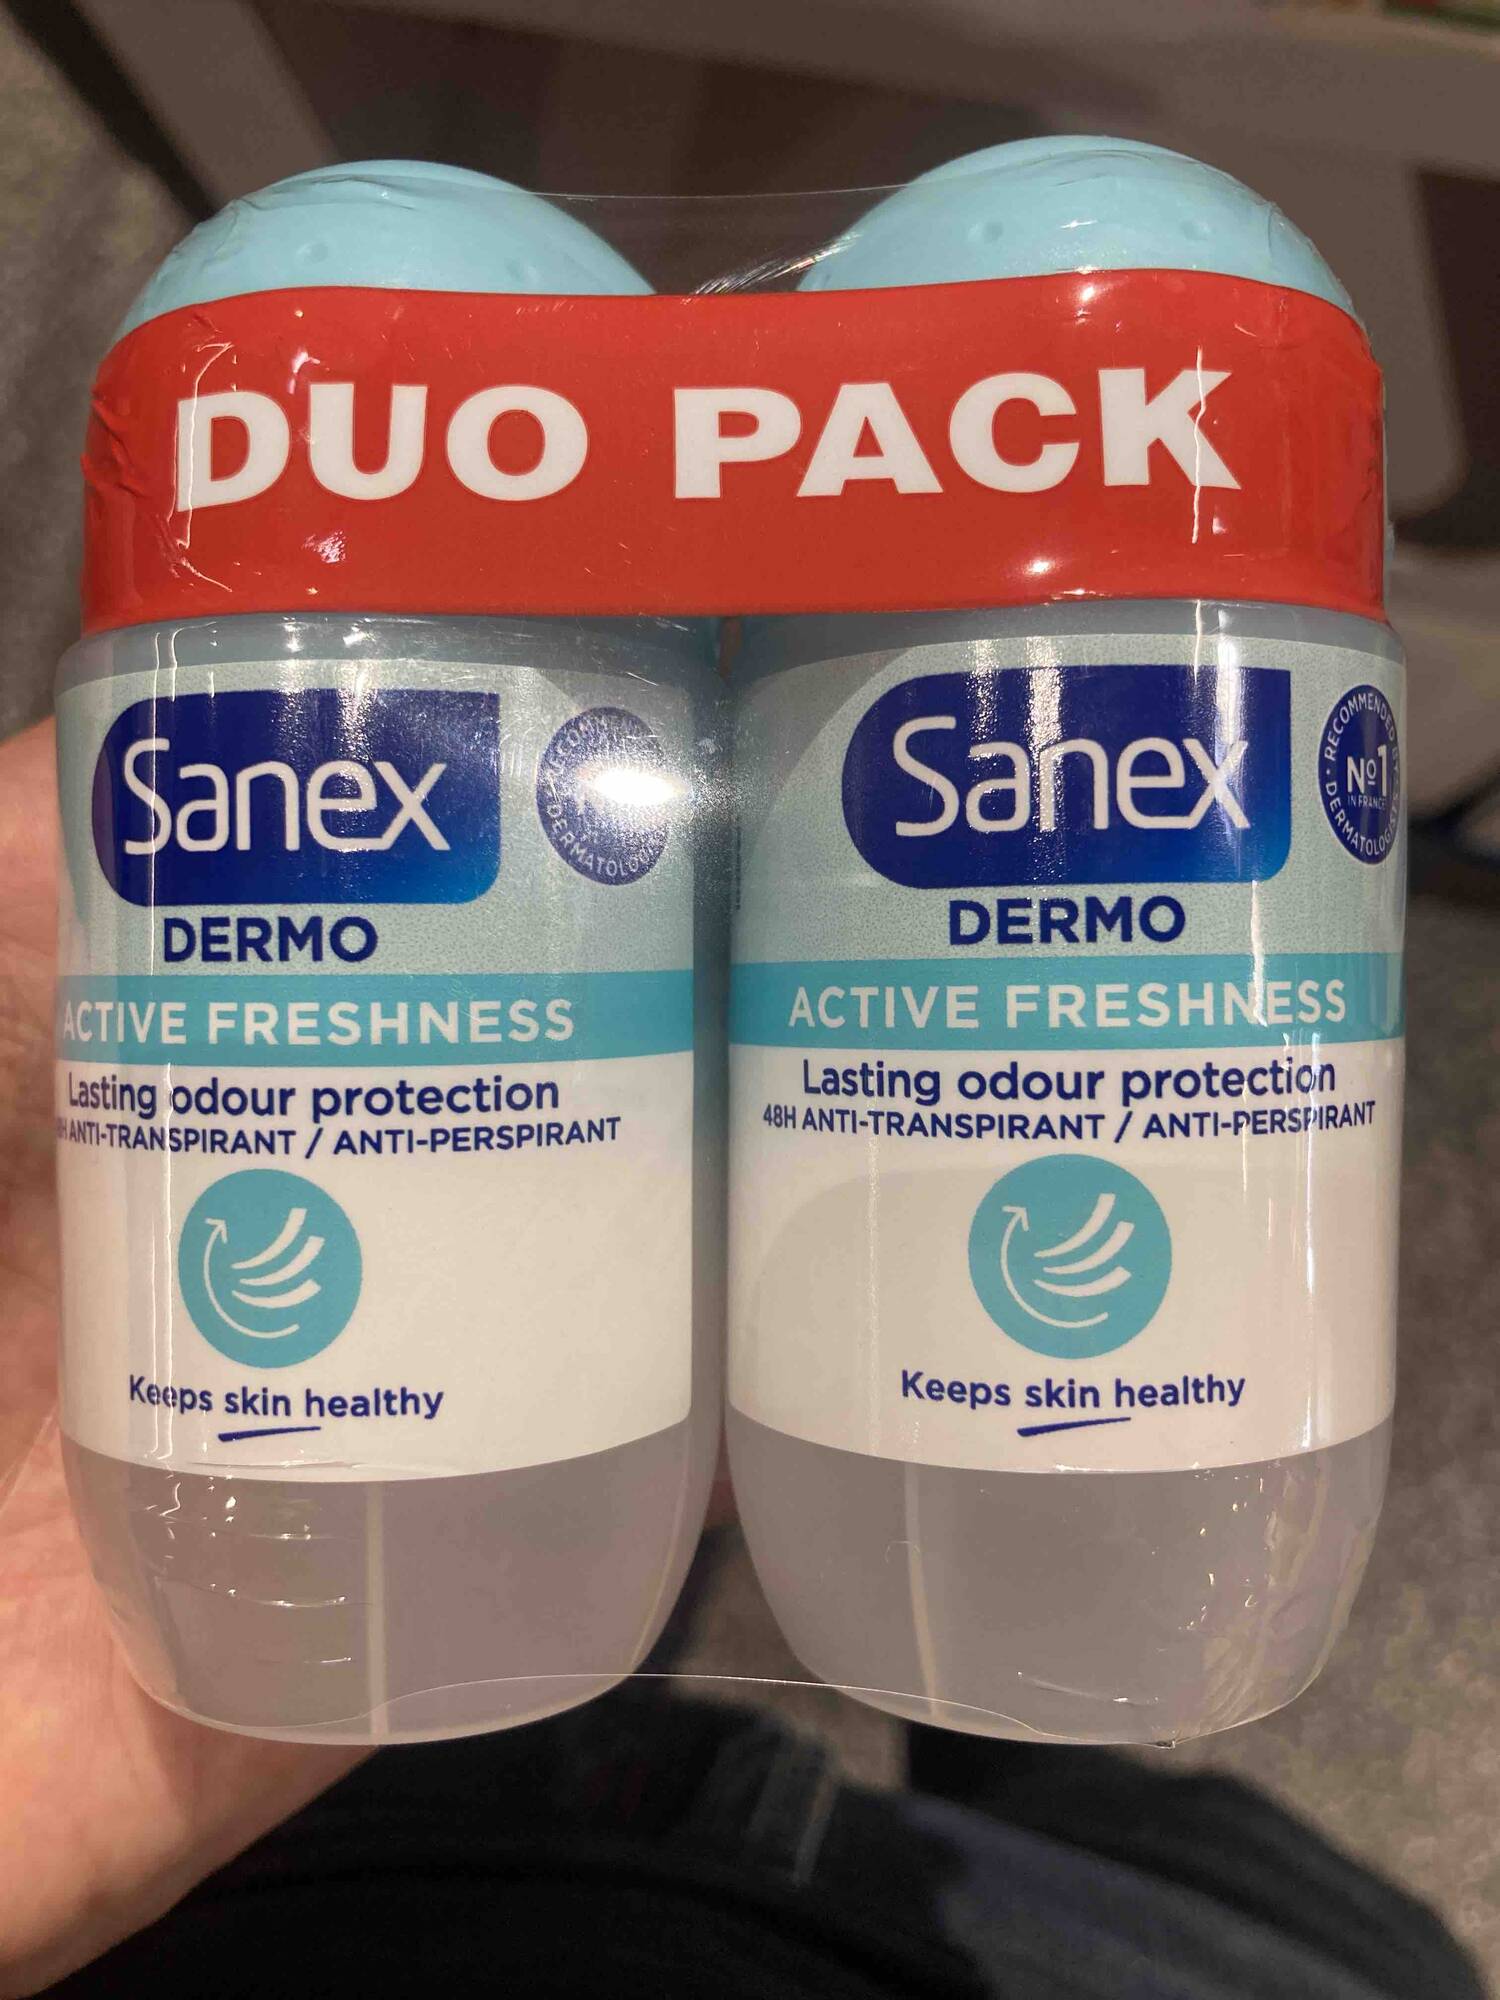 SANEX - Active Freshness - Anti-transpirant 48h